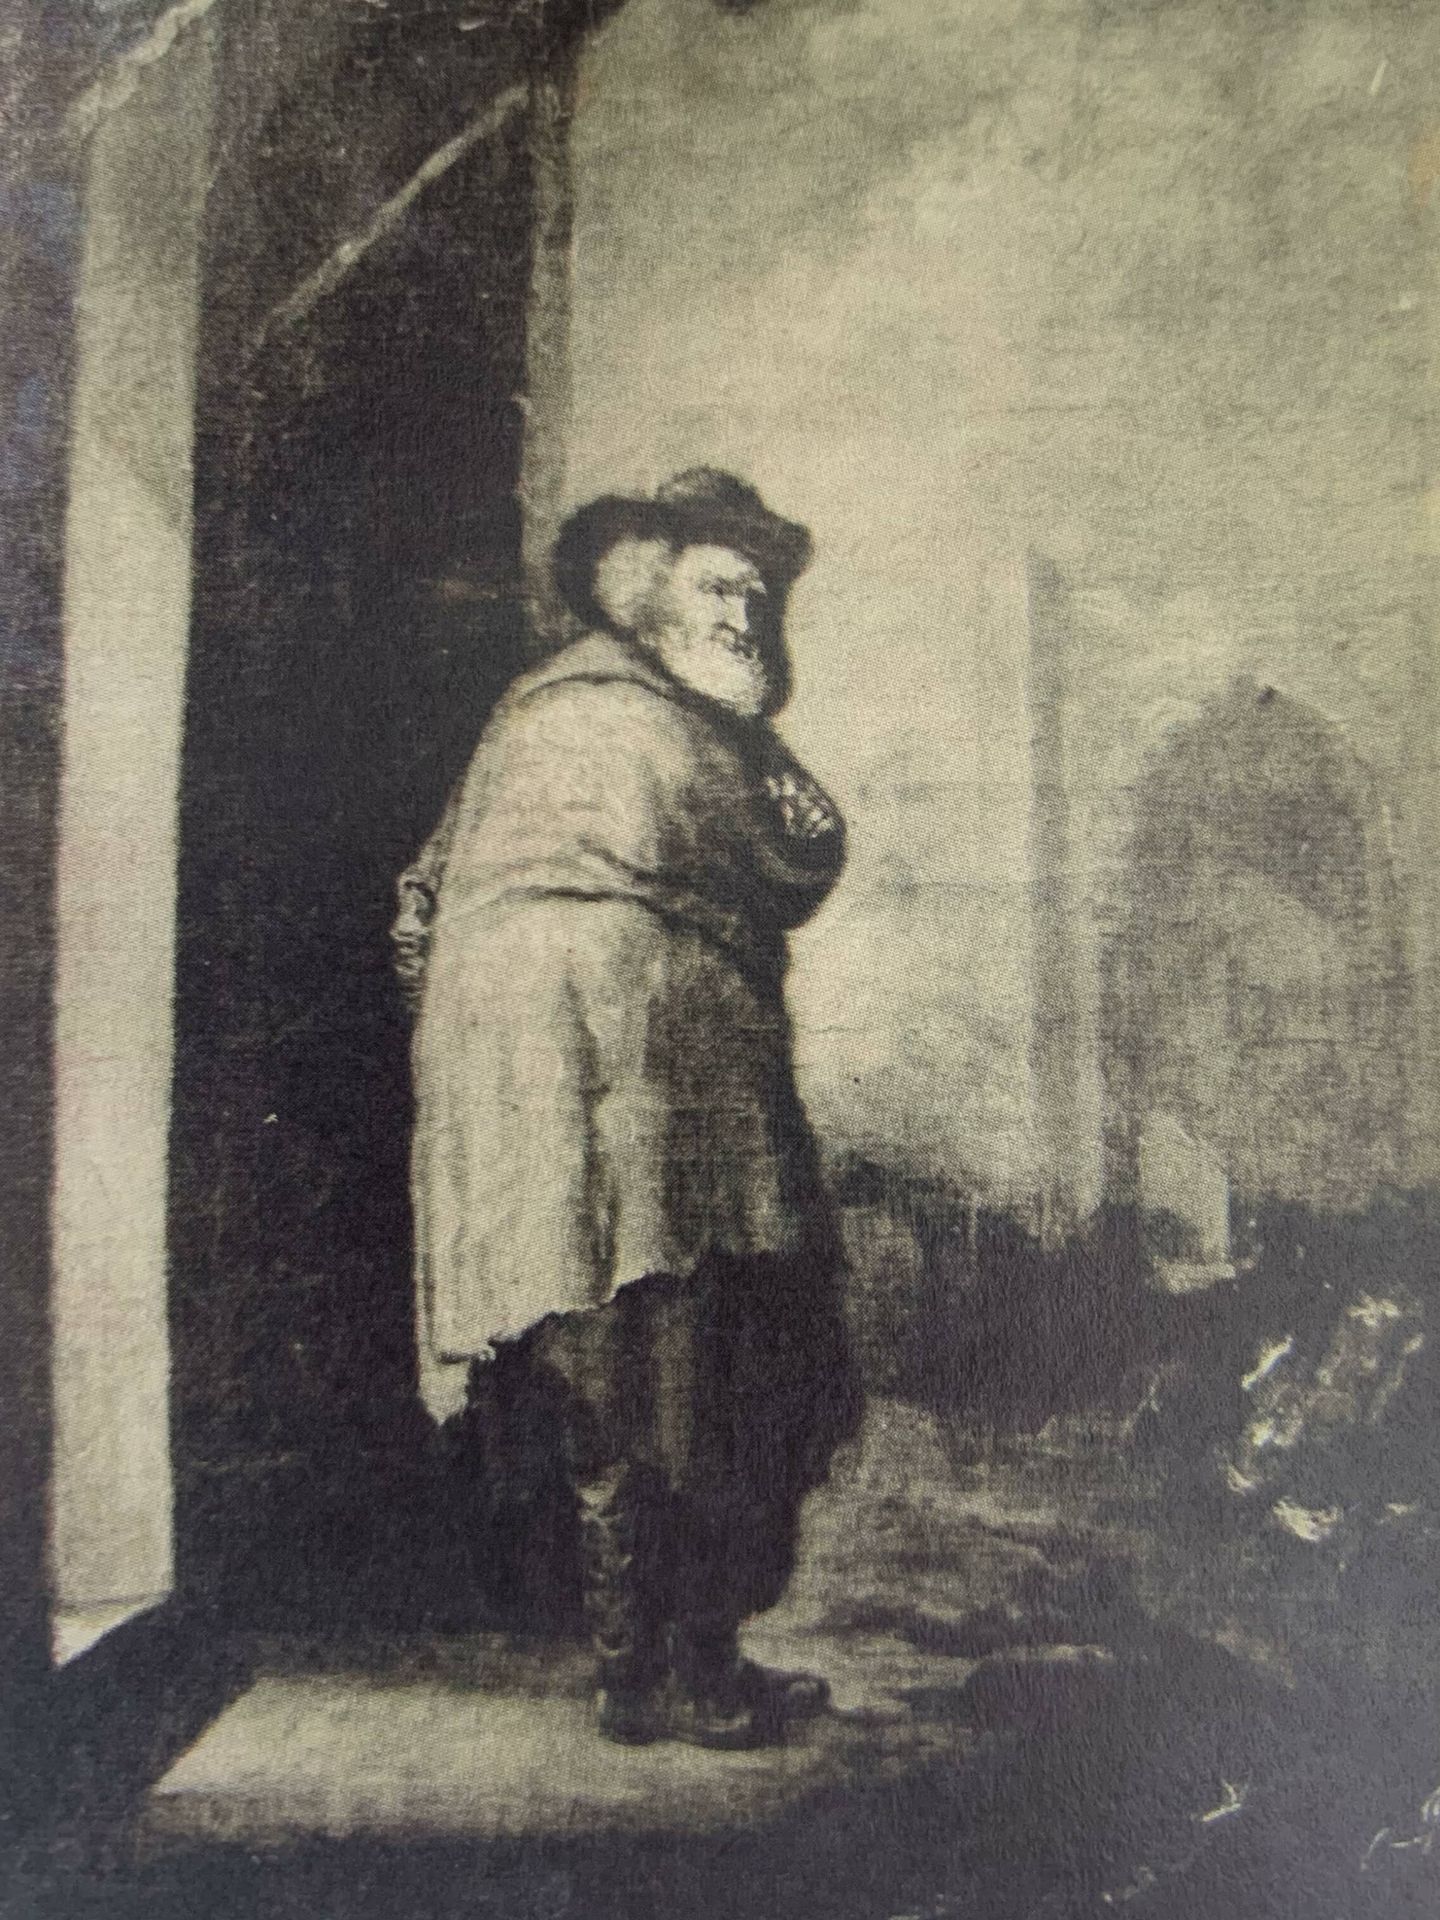 Copia de Velázquez realizada por Eduardo Olaya en 1959. 